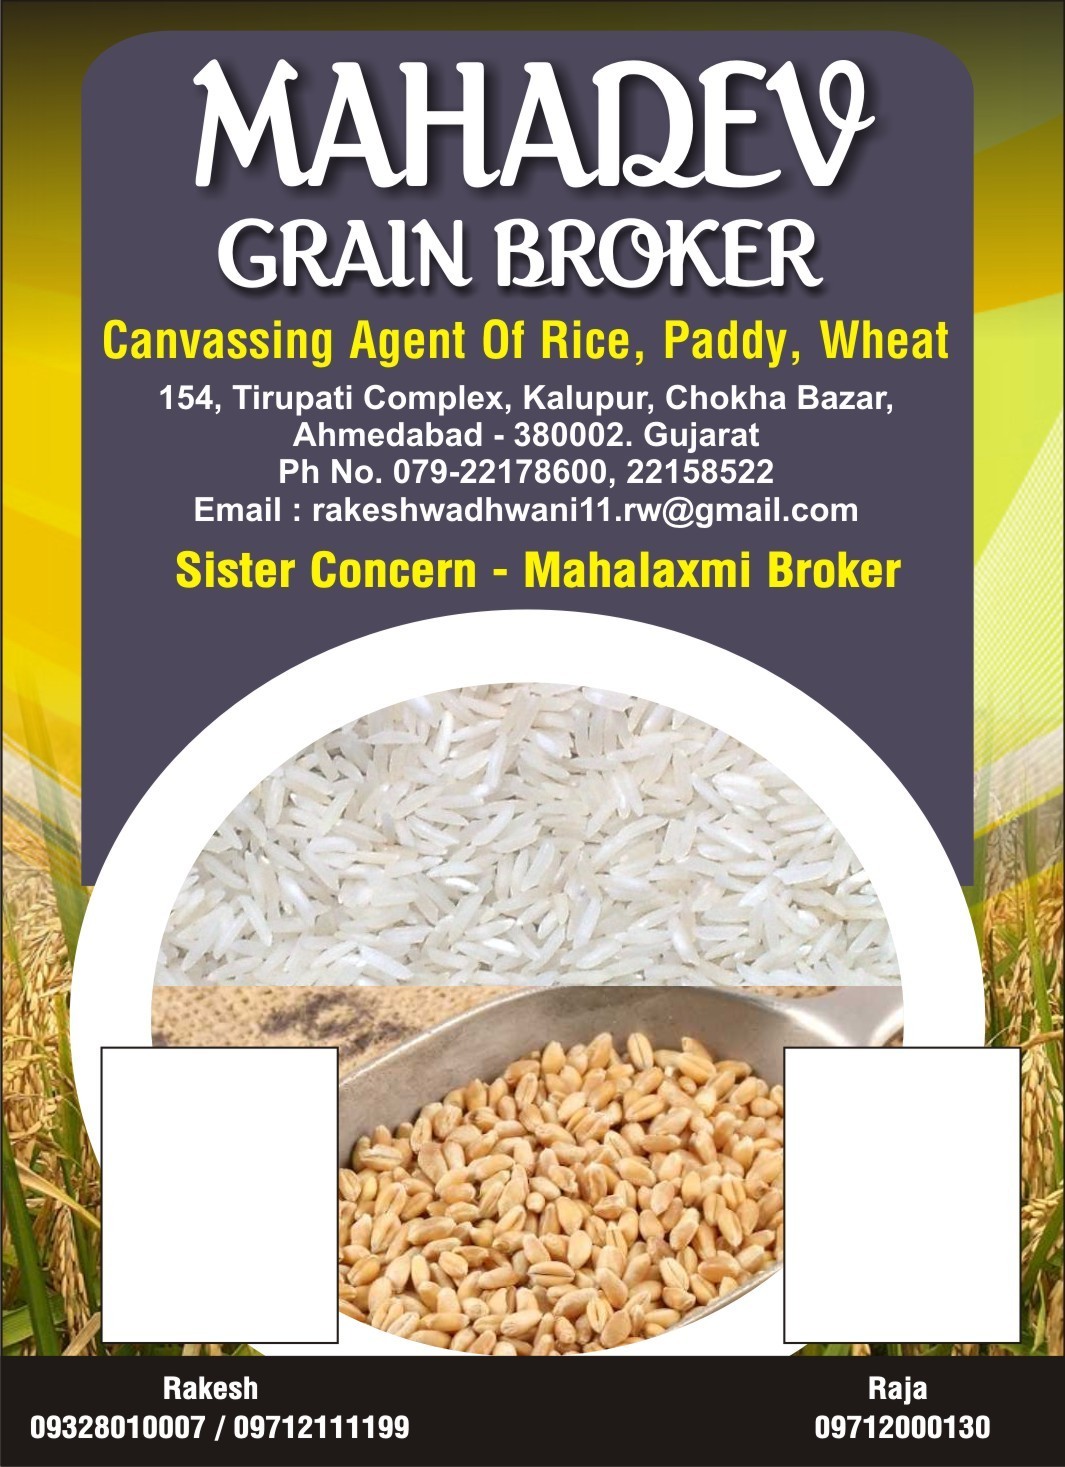 Mahadev Grain Brokers